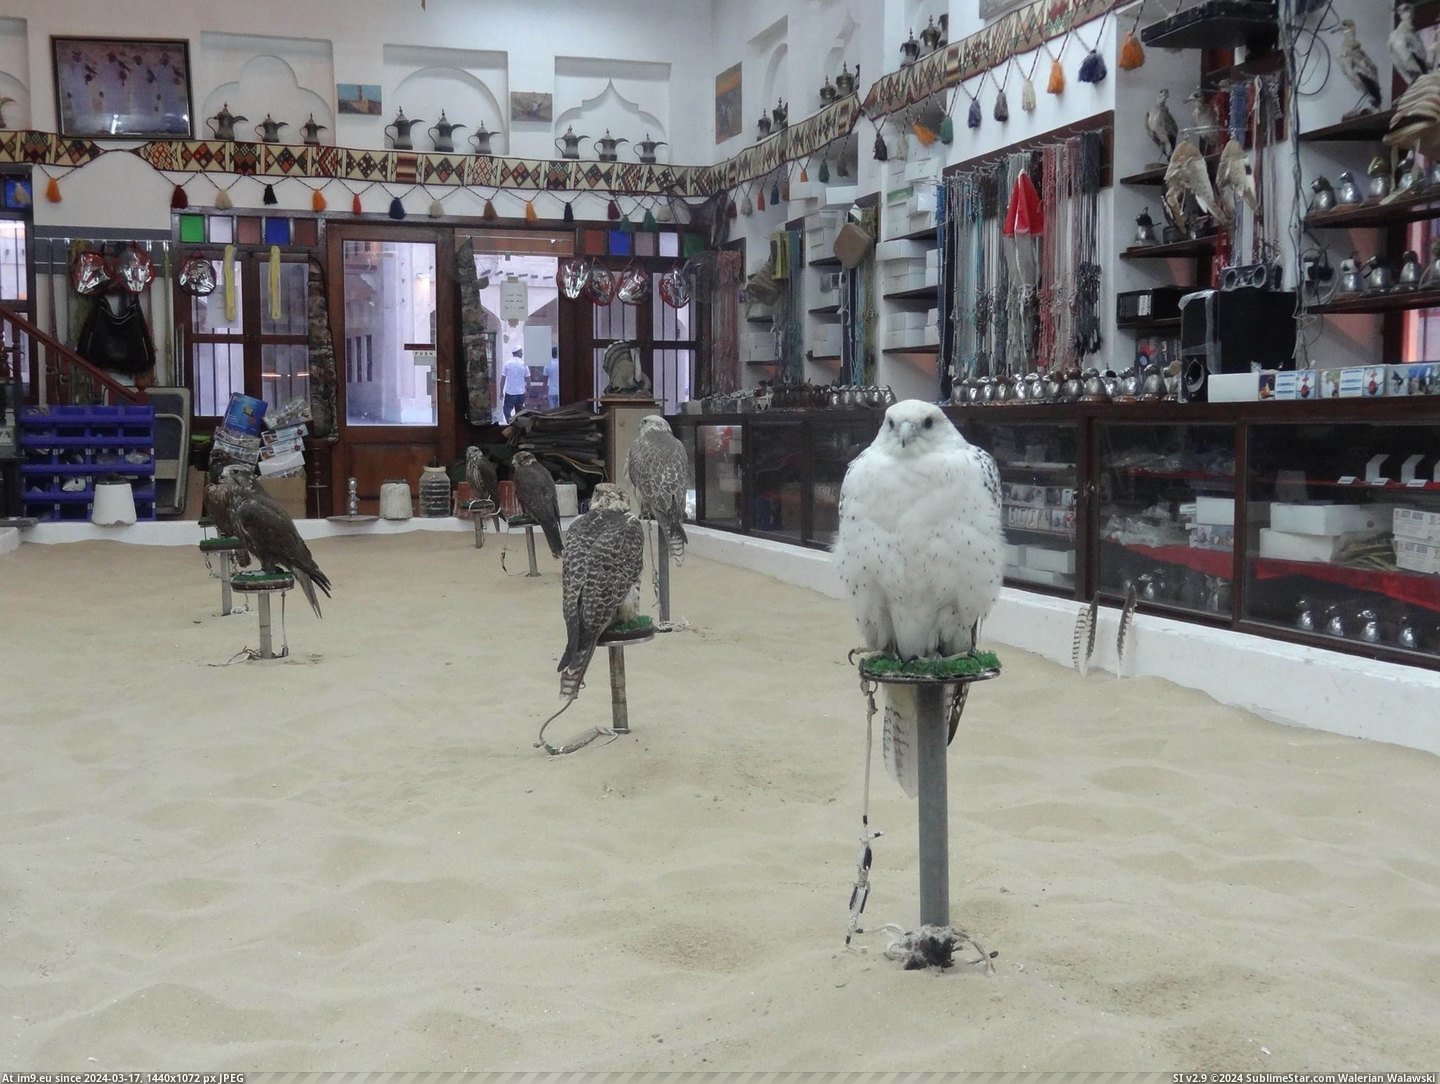 #Friend #Shop #Qatar #Doha #Visited #Falcon [Pics] A friend of mine visited a Falcon shop in Doha, Qatar. Pic. (Image of album My r/PICS favs))